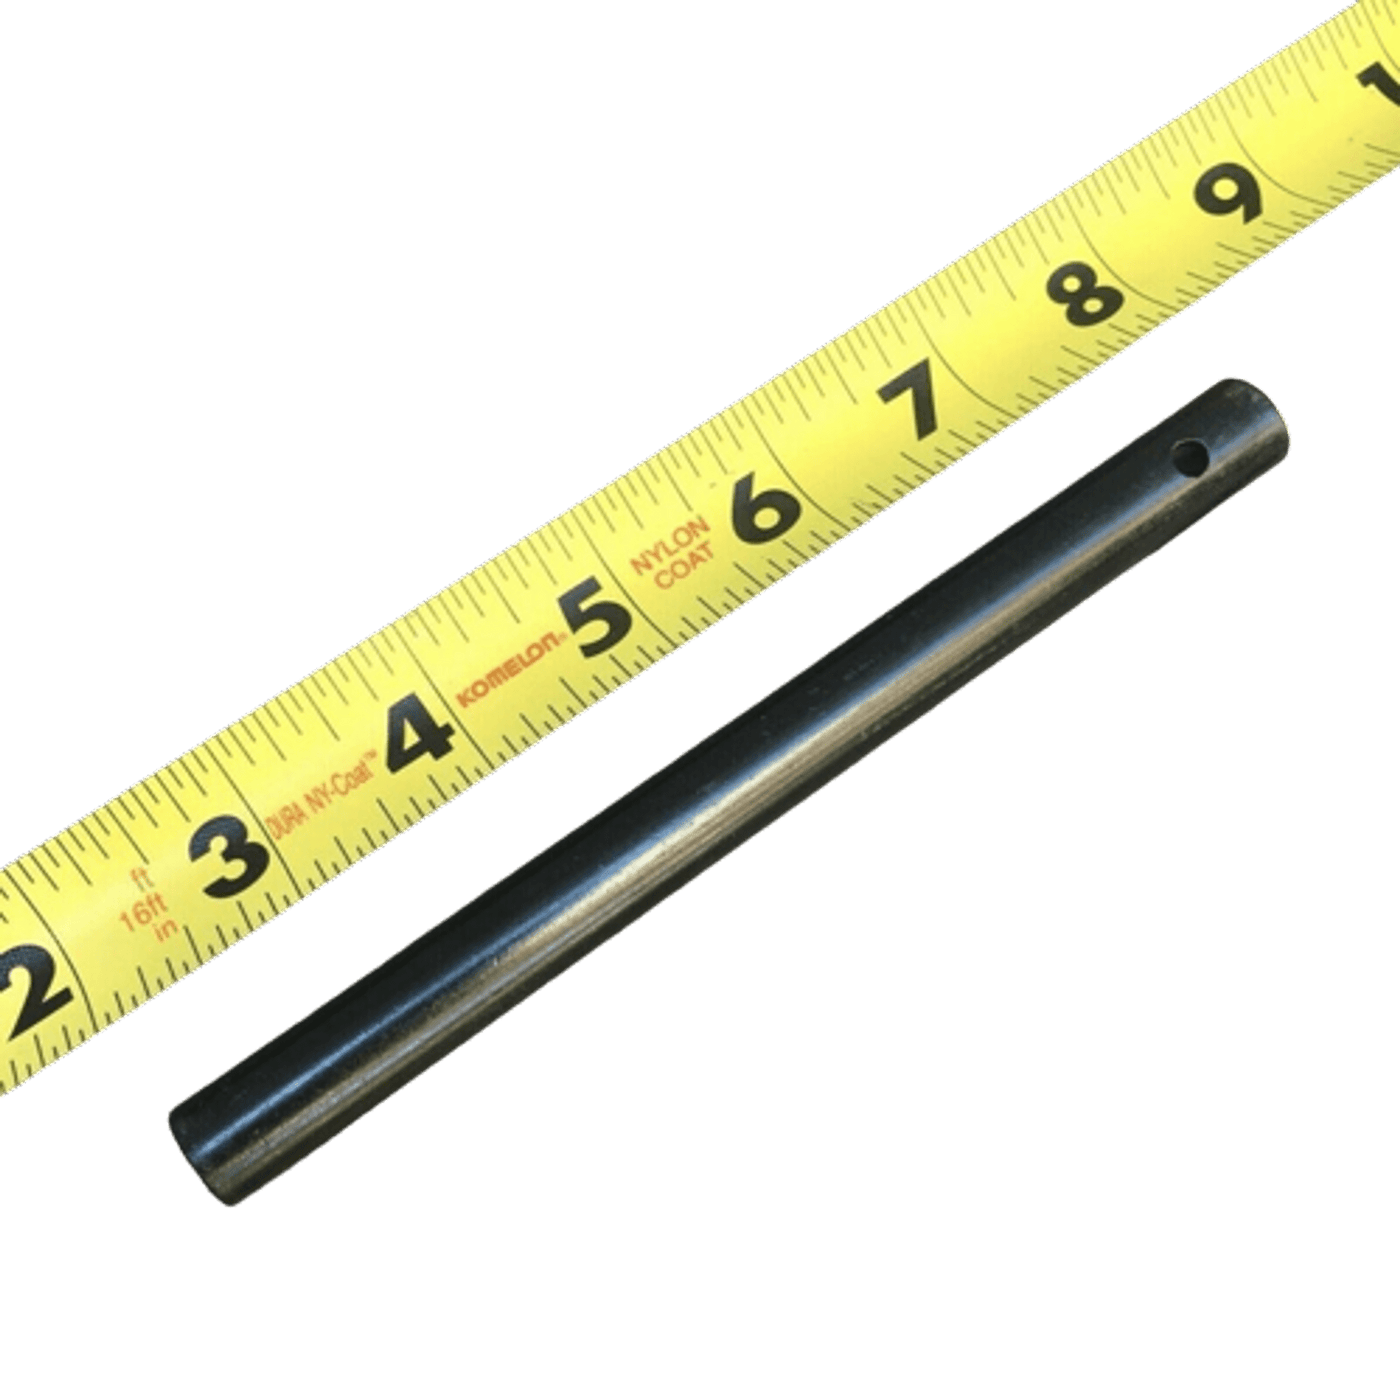 ferro rod six inches